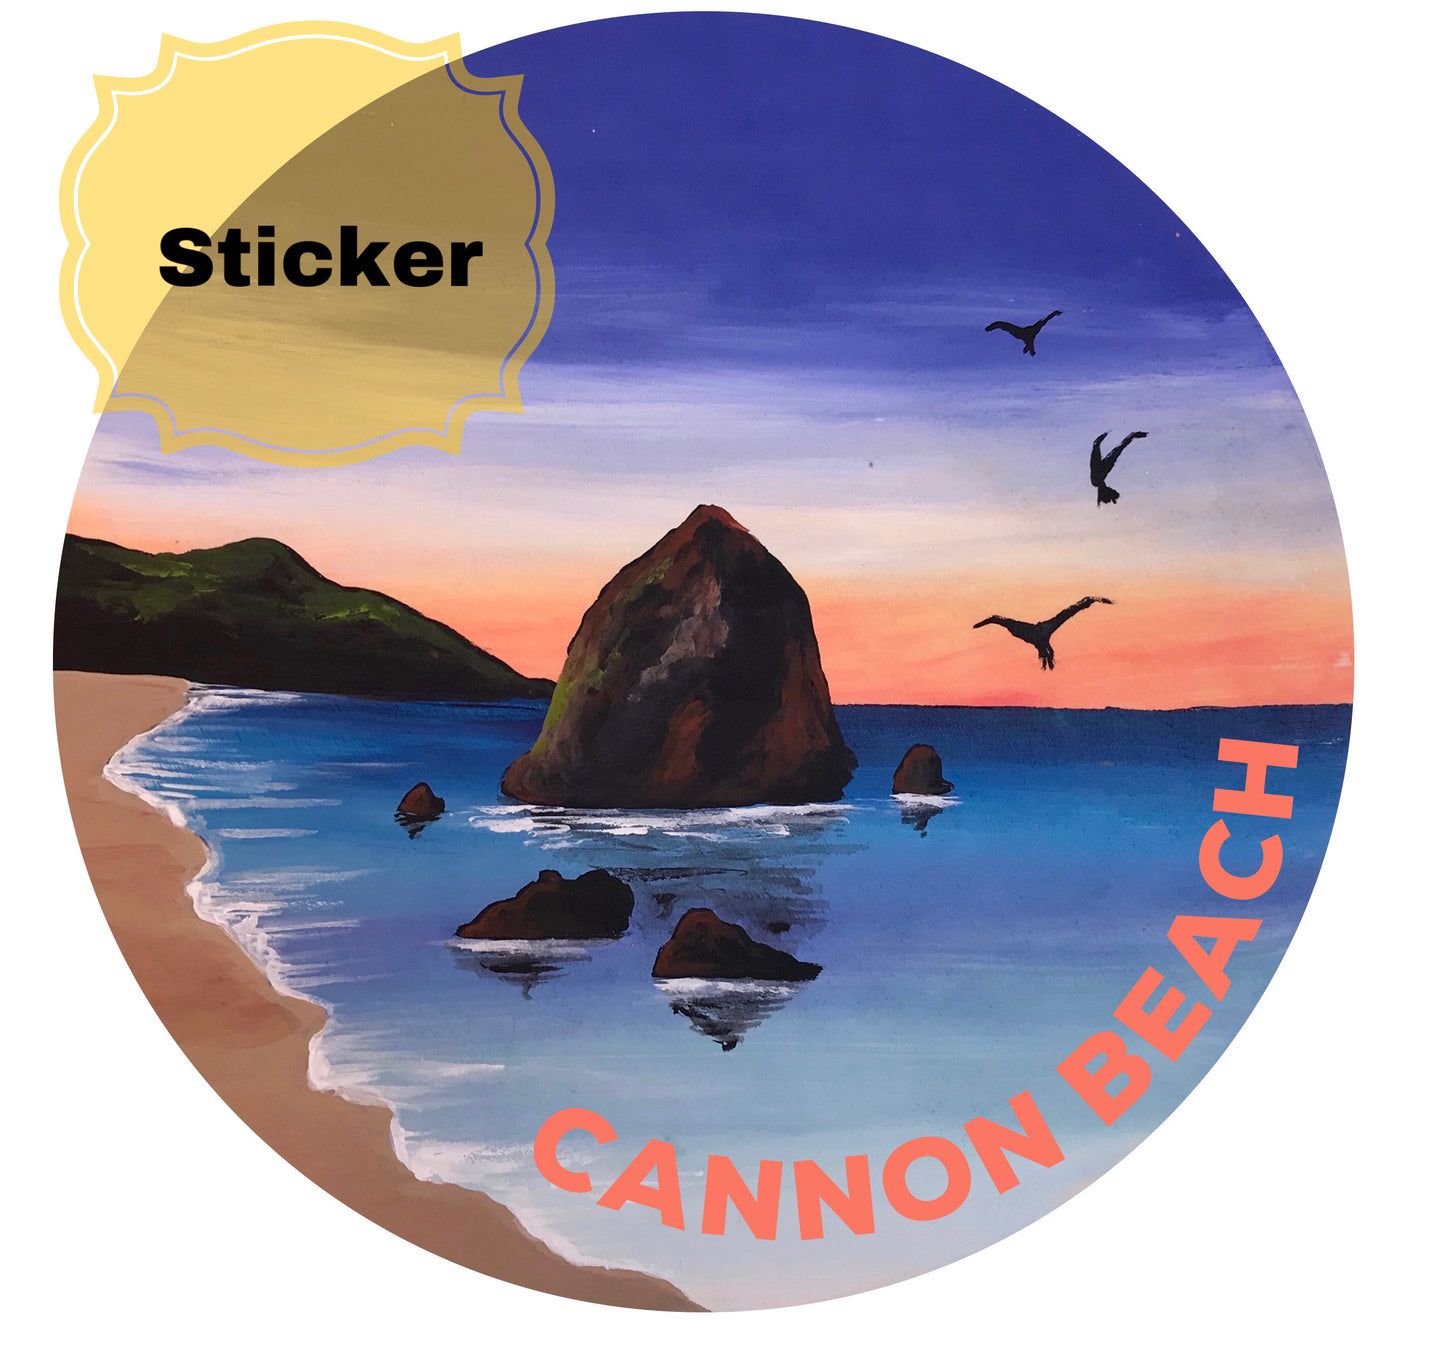 Cannon beach haystack rock mini sticker Pacific Northwest weatherproof vinyl